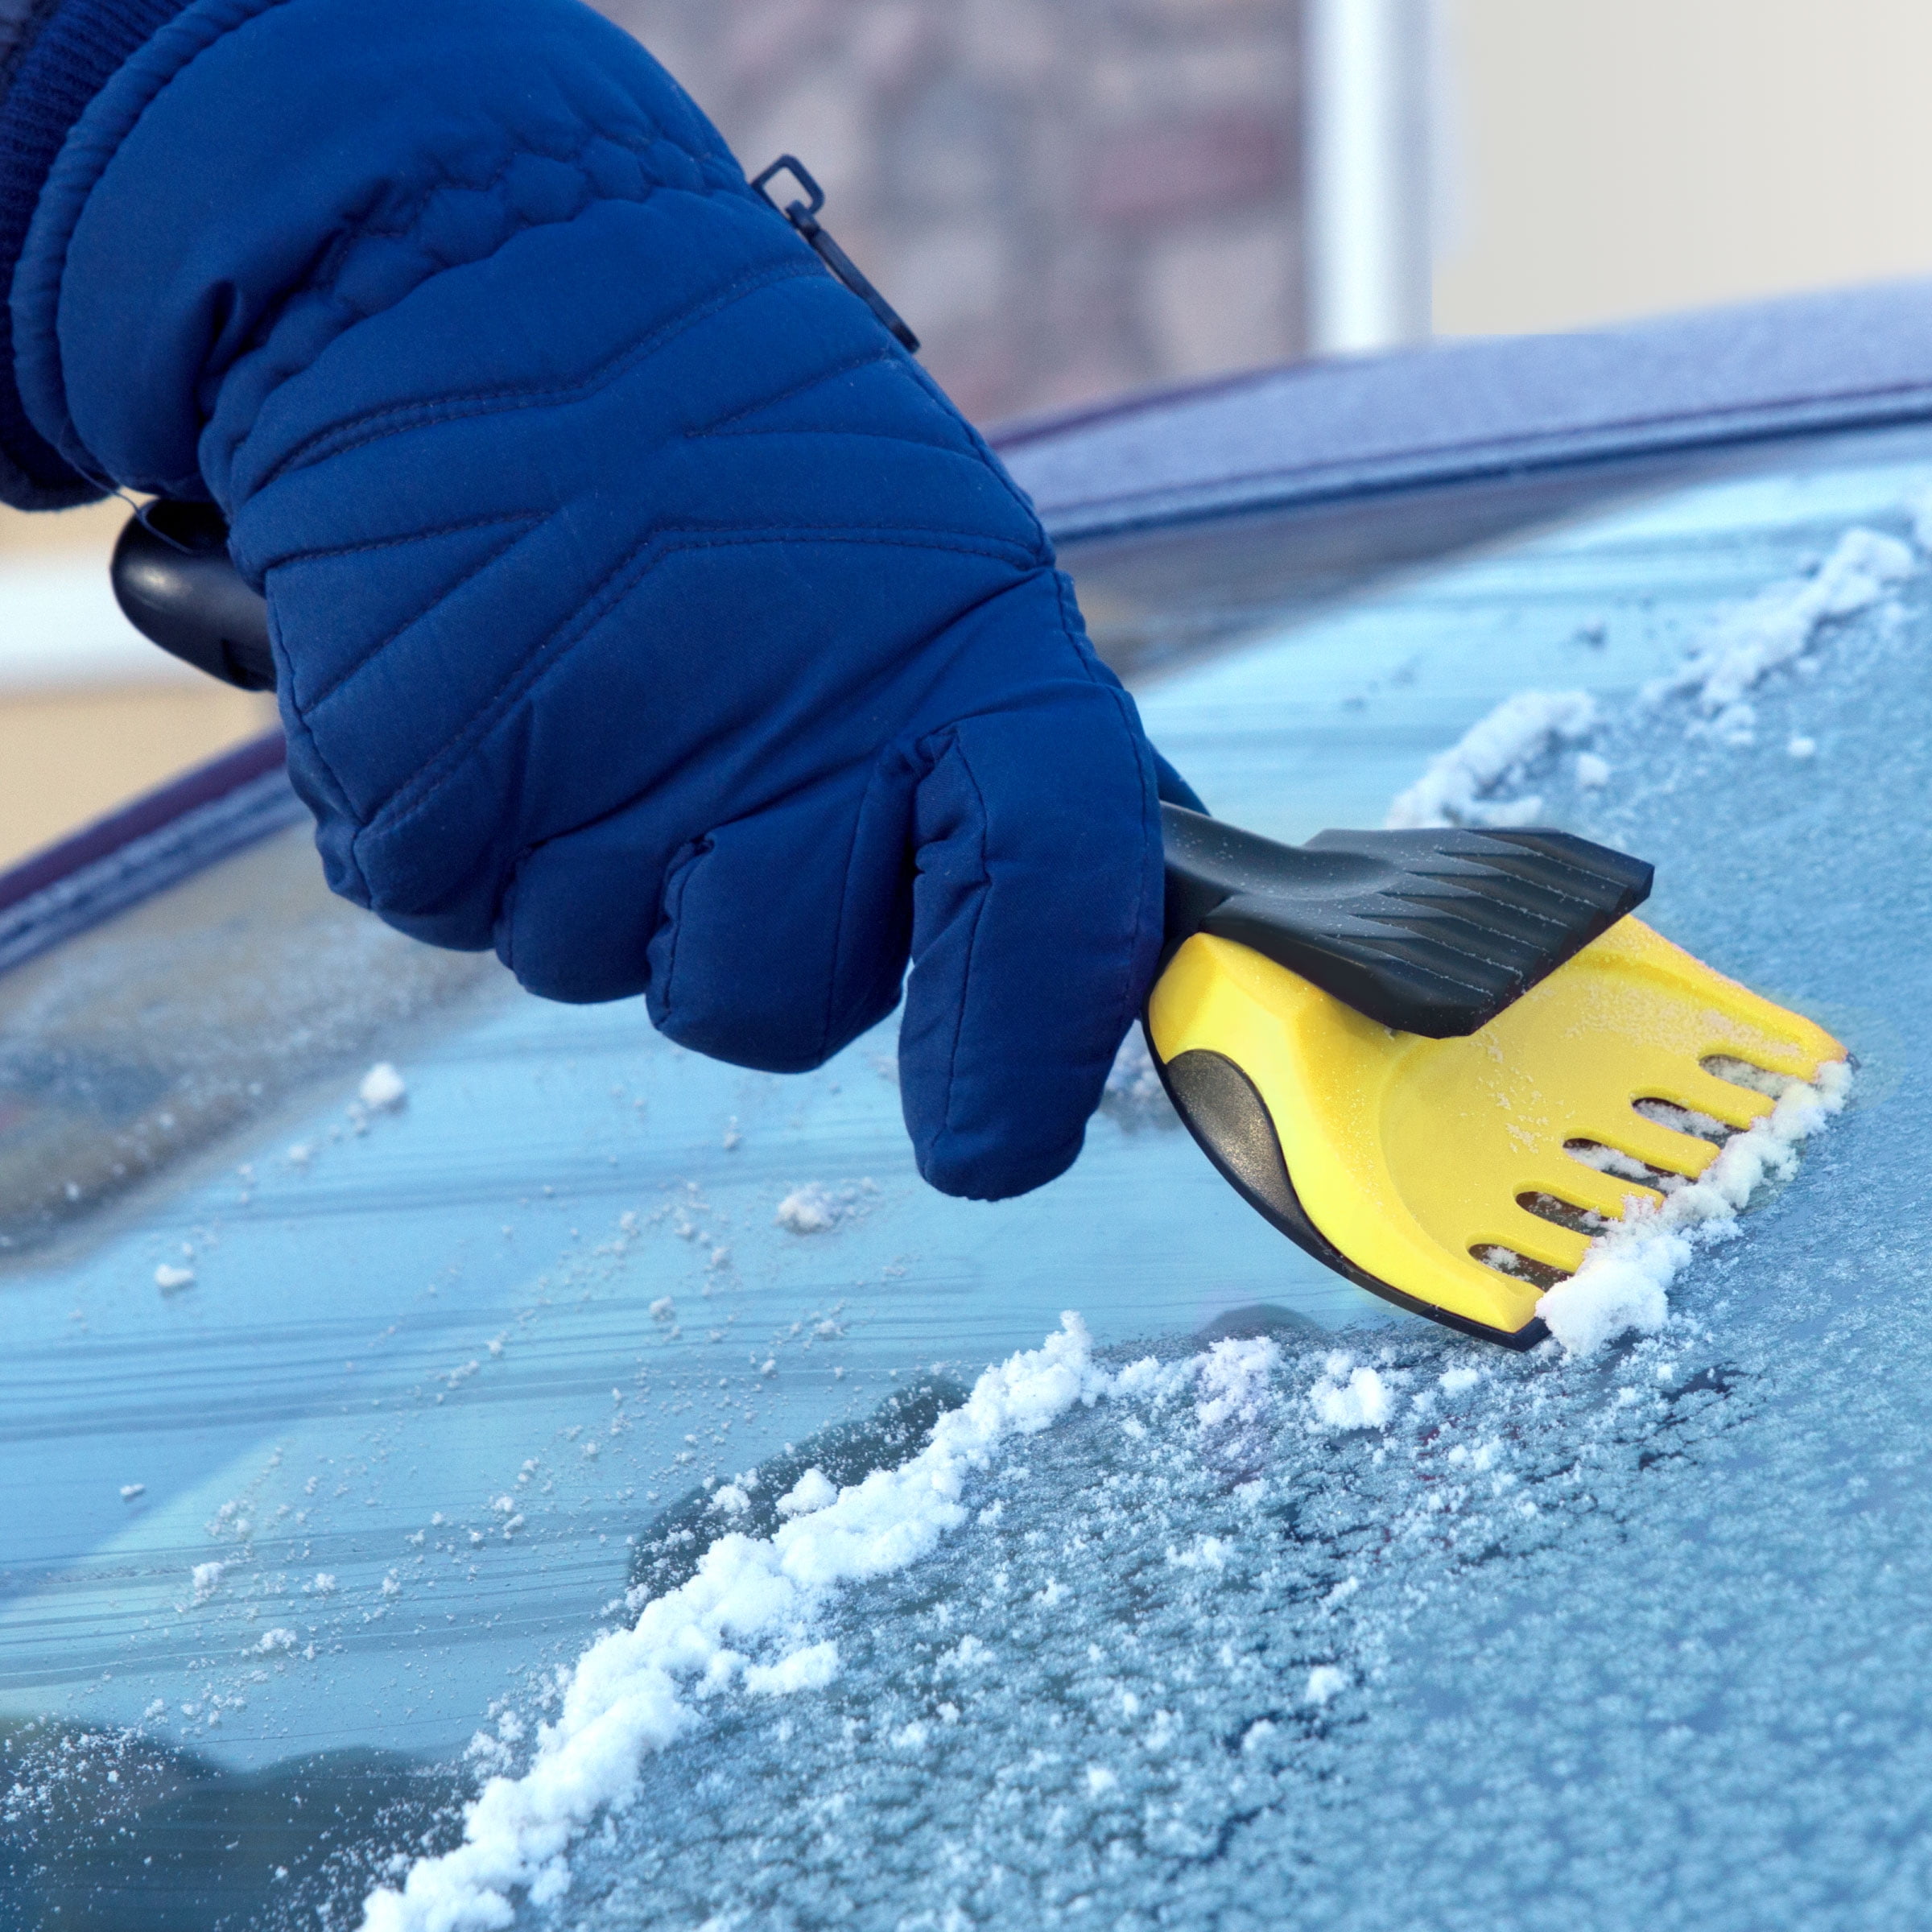 Rain-X 26 Ergo Car Snow Brush with Ice Scraper Tool, Black and Yellow,  Size 26, 1 Pack, 1220185025X 